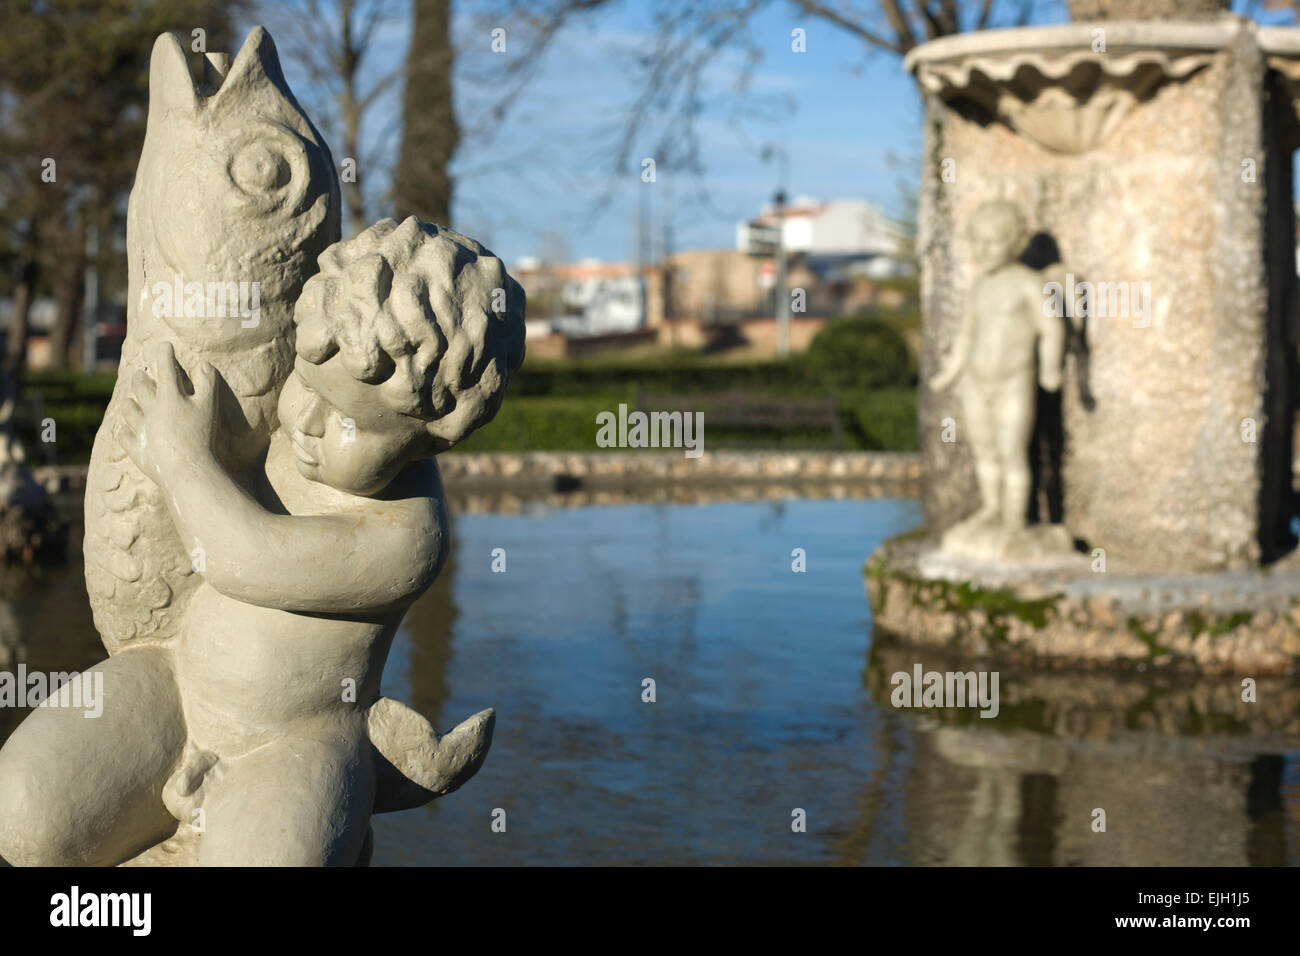 Cherub boys on water fountain statue in garden, Badajoz, Spain Stock Photo